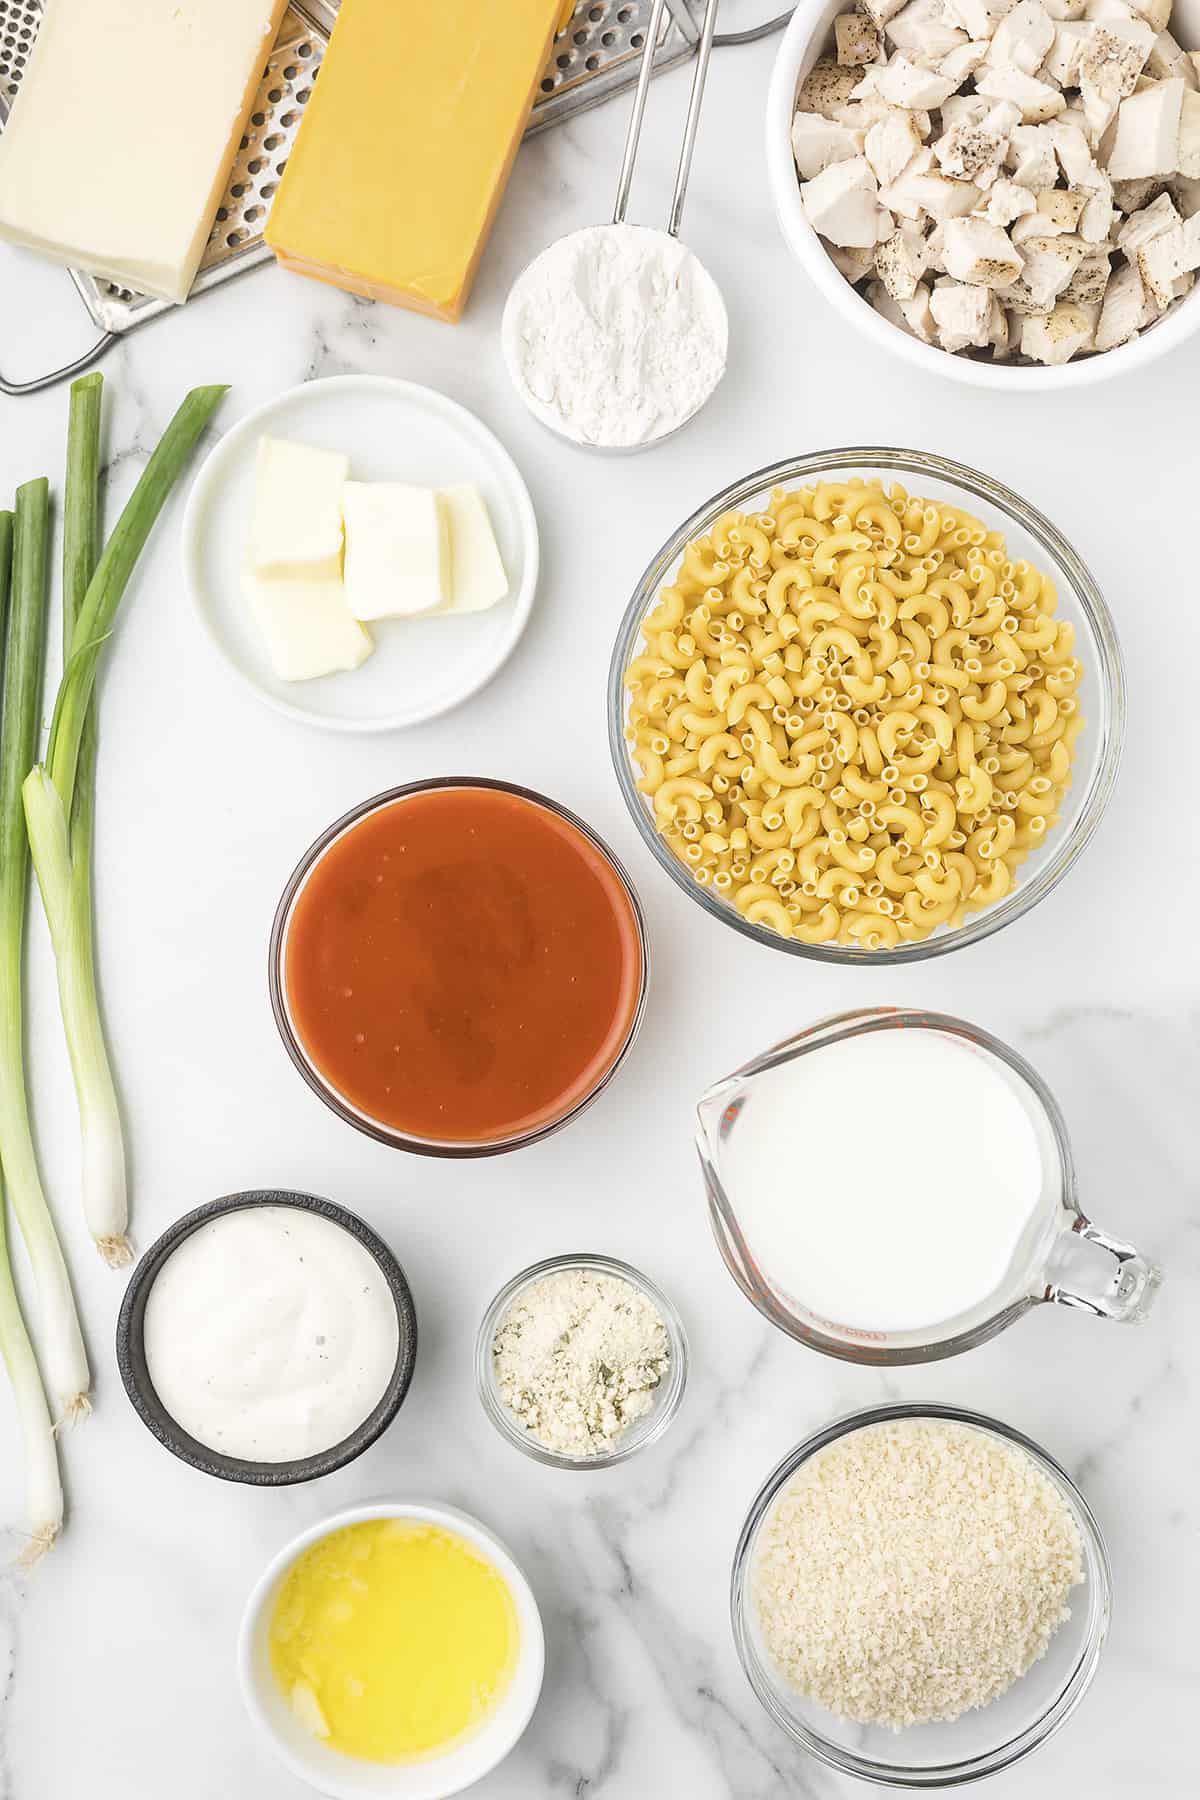 Ingredients for buffalo chicken pasta recipe.